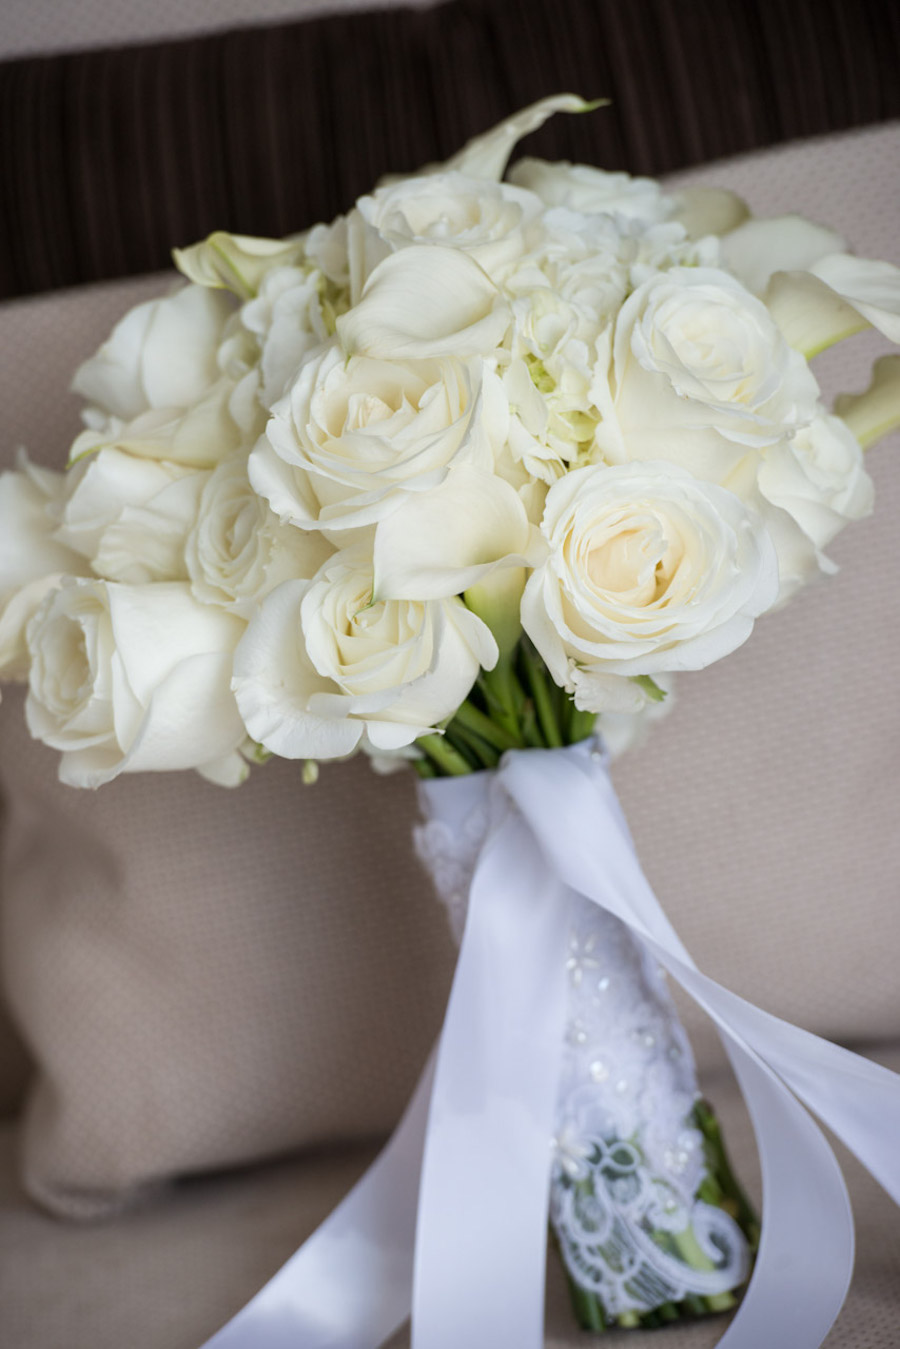 Wedding Wedding Bouquet of White Roses with Lace Wrap | Tampa Wedding Photographer Jeff Mason Photography